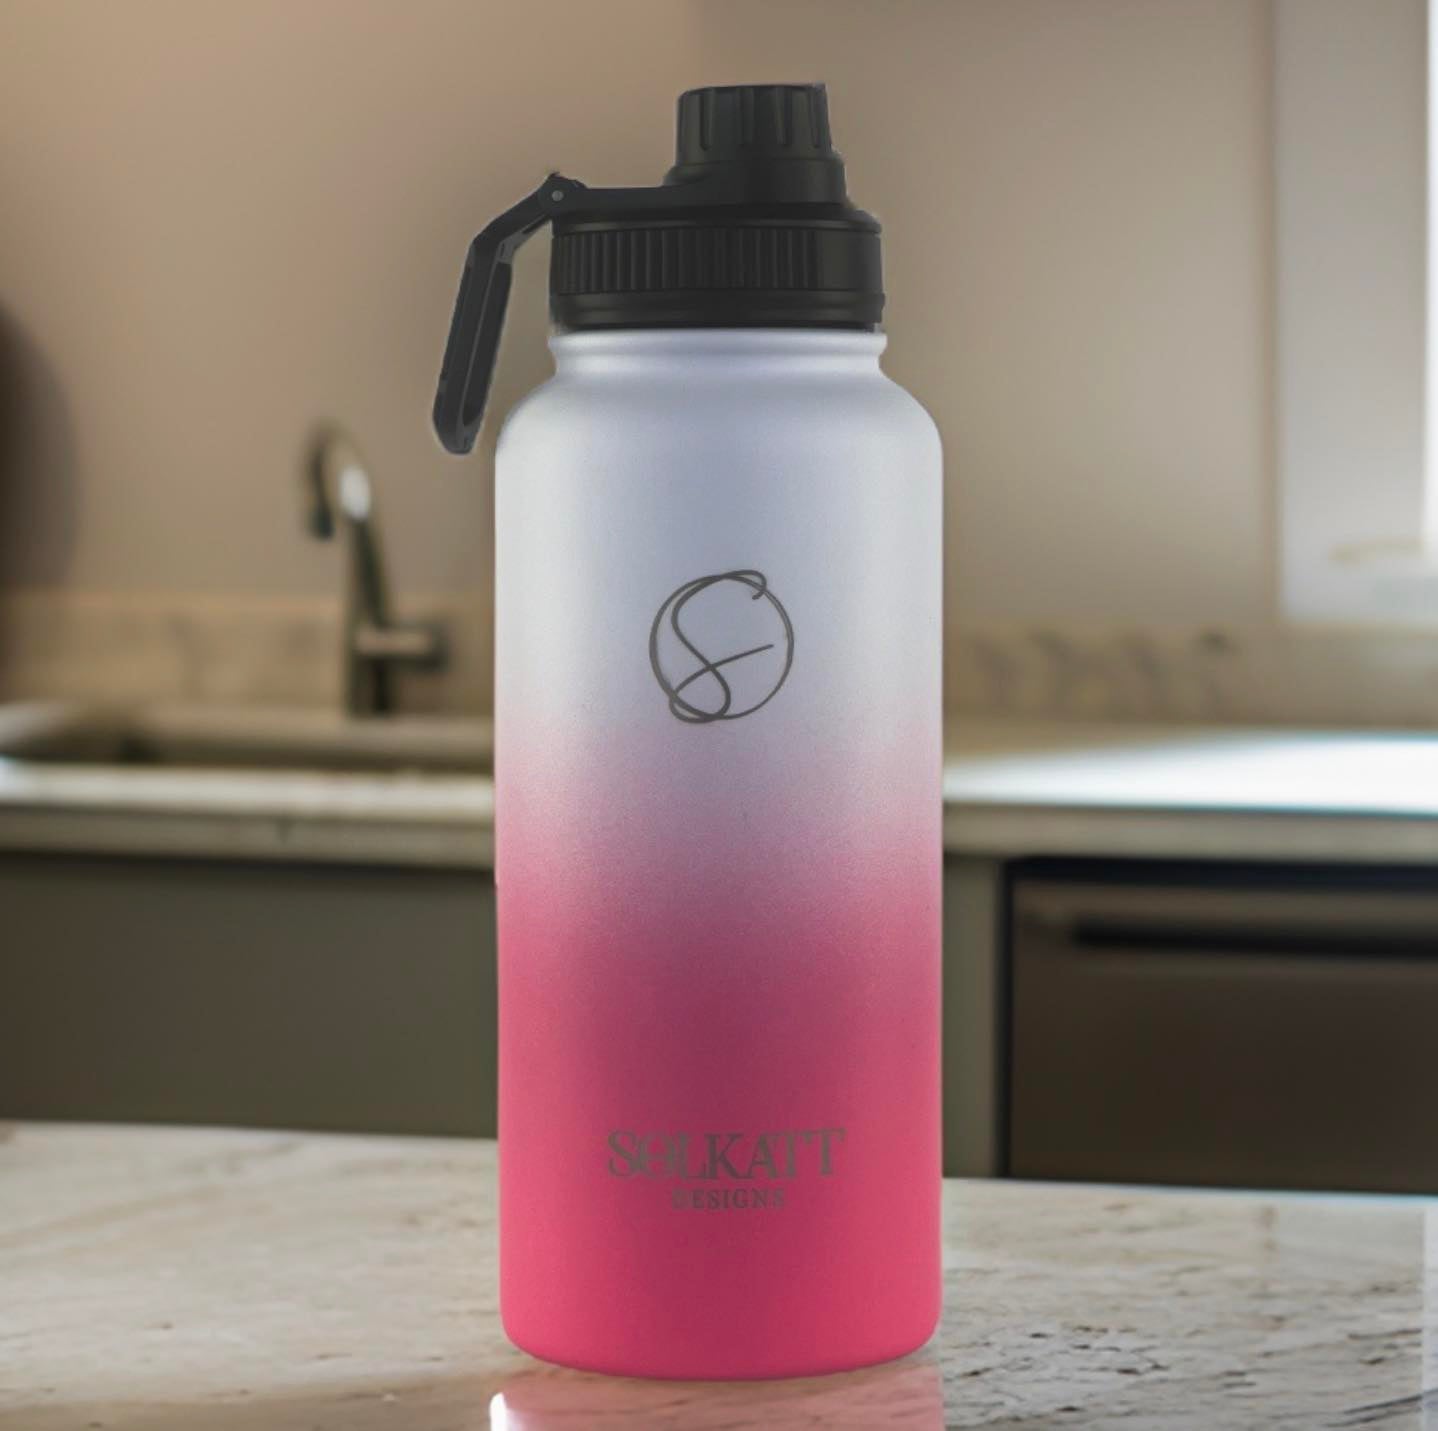 Hot Pink 950ml / 32oz Stainless Steel Insulated Drink Bottle - Solkatt Designs 